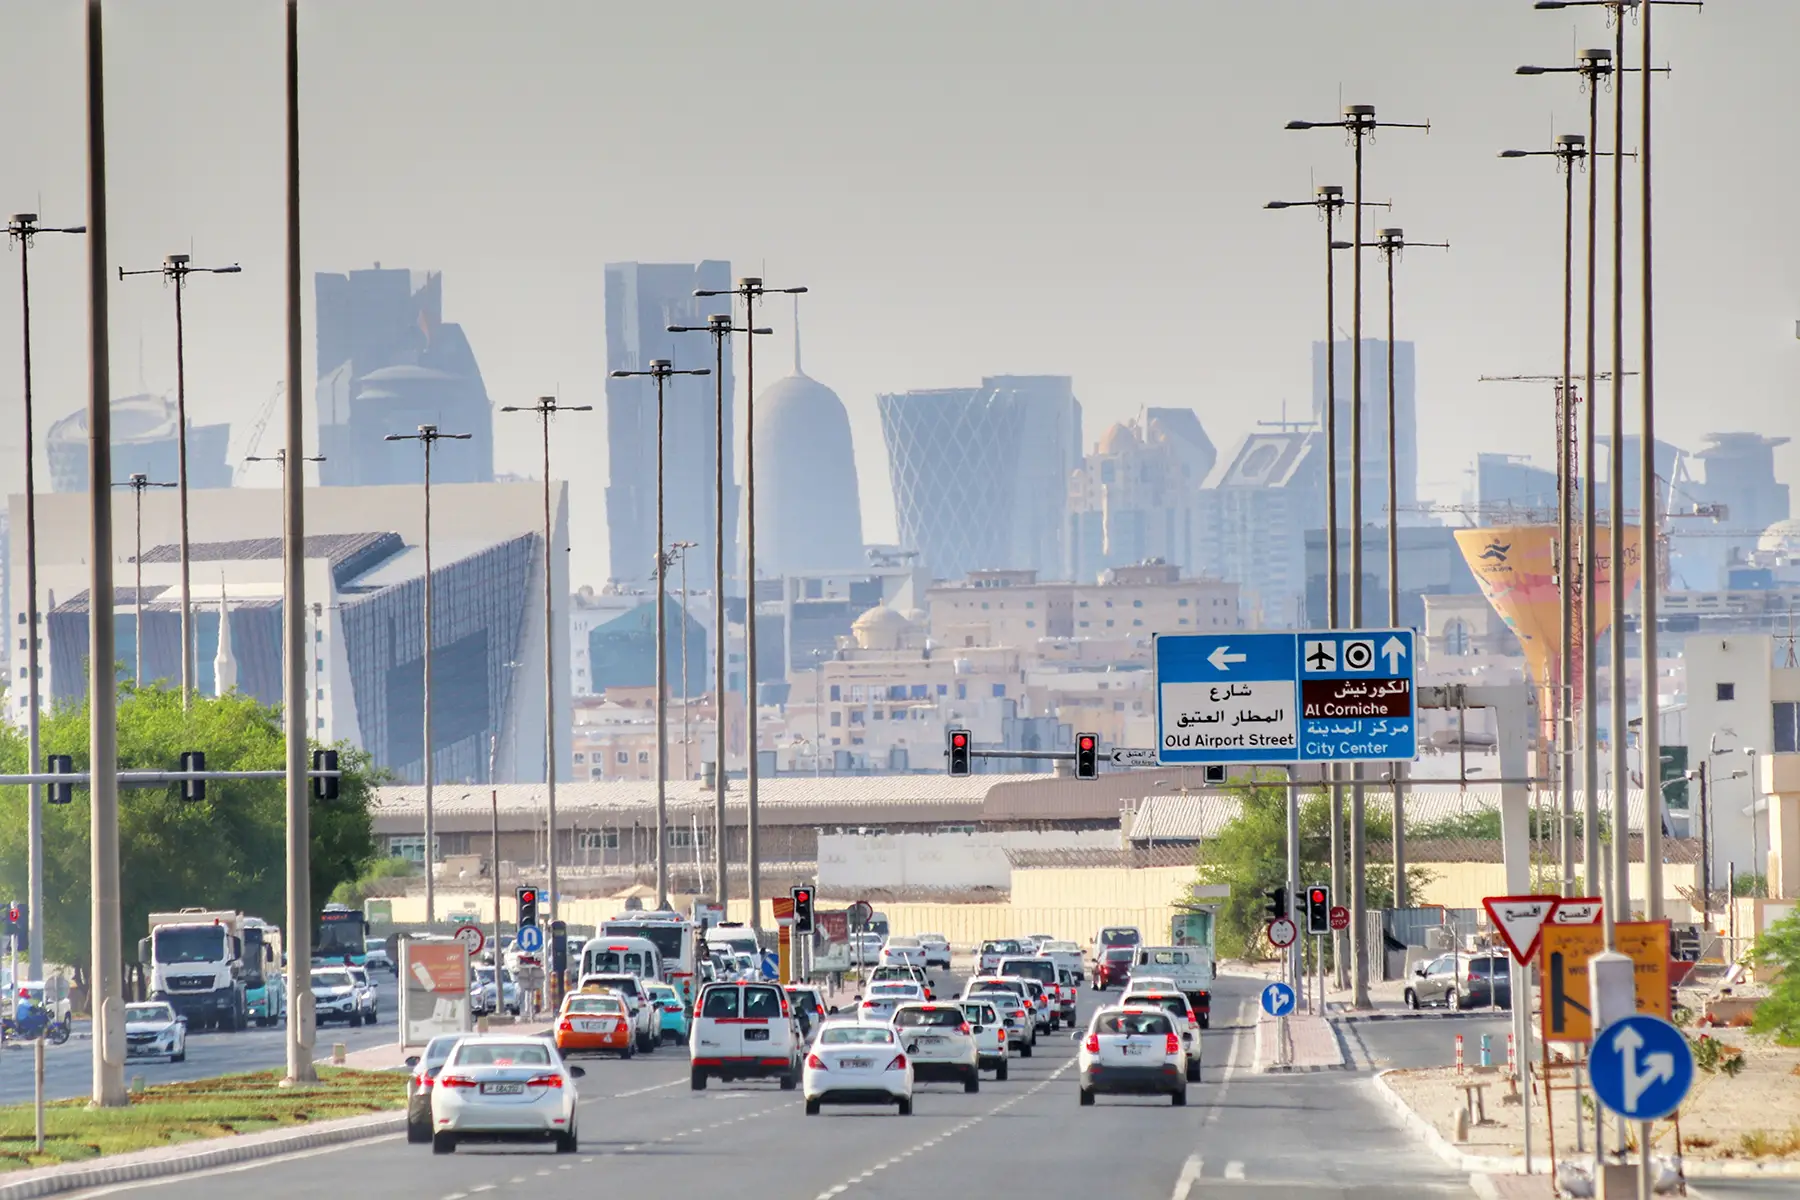 Traffic in Doha